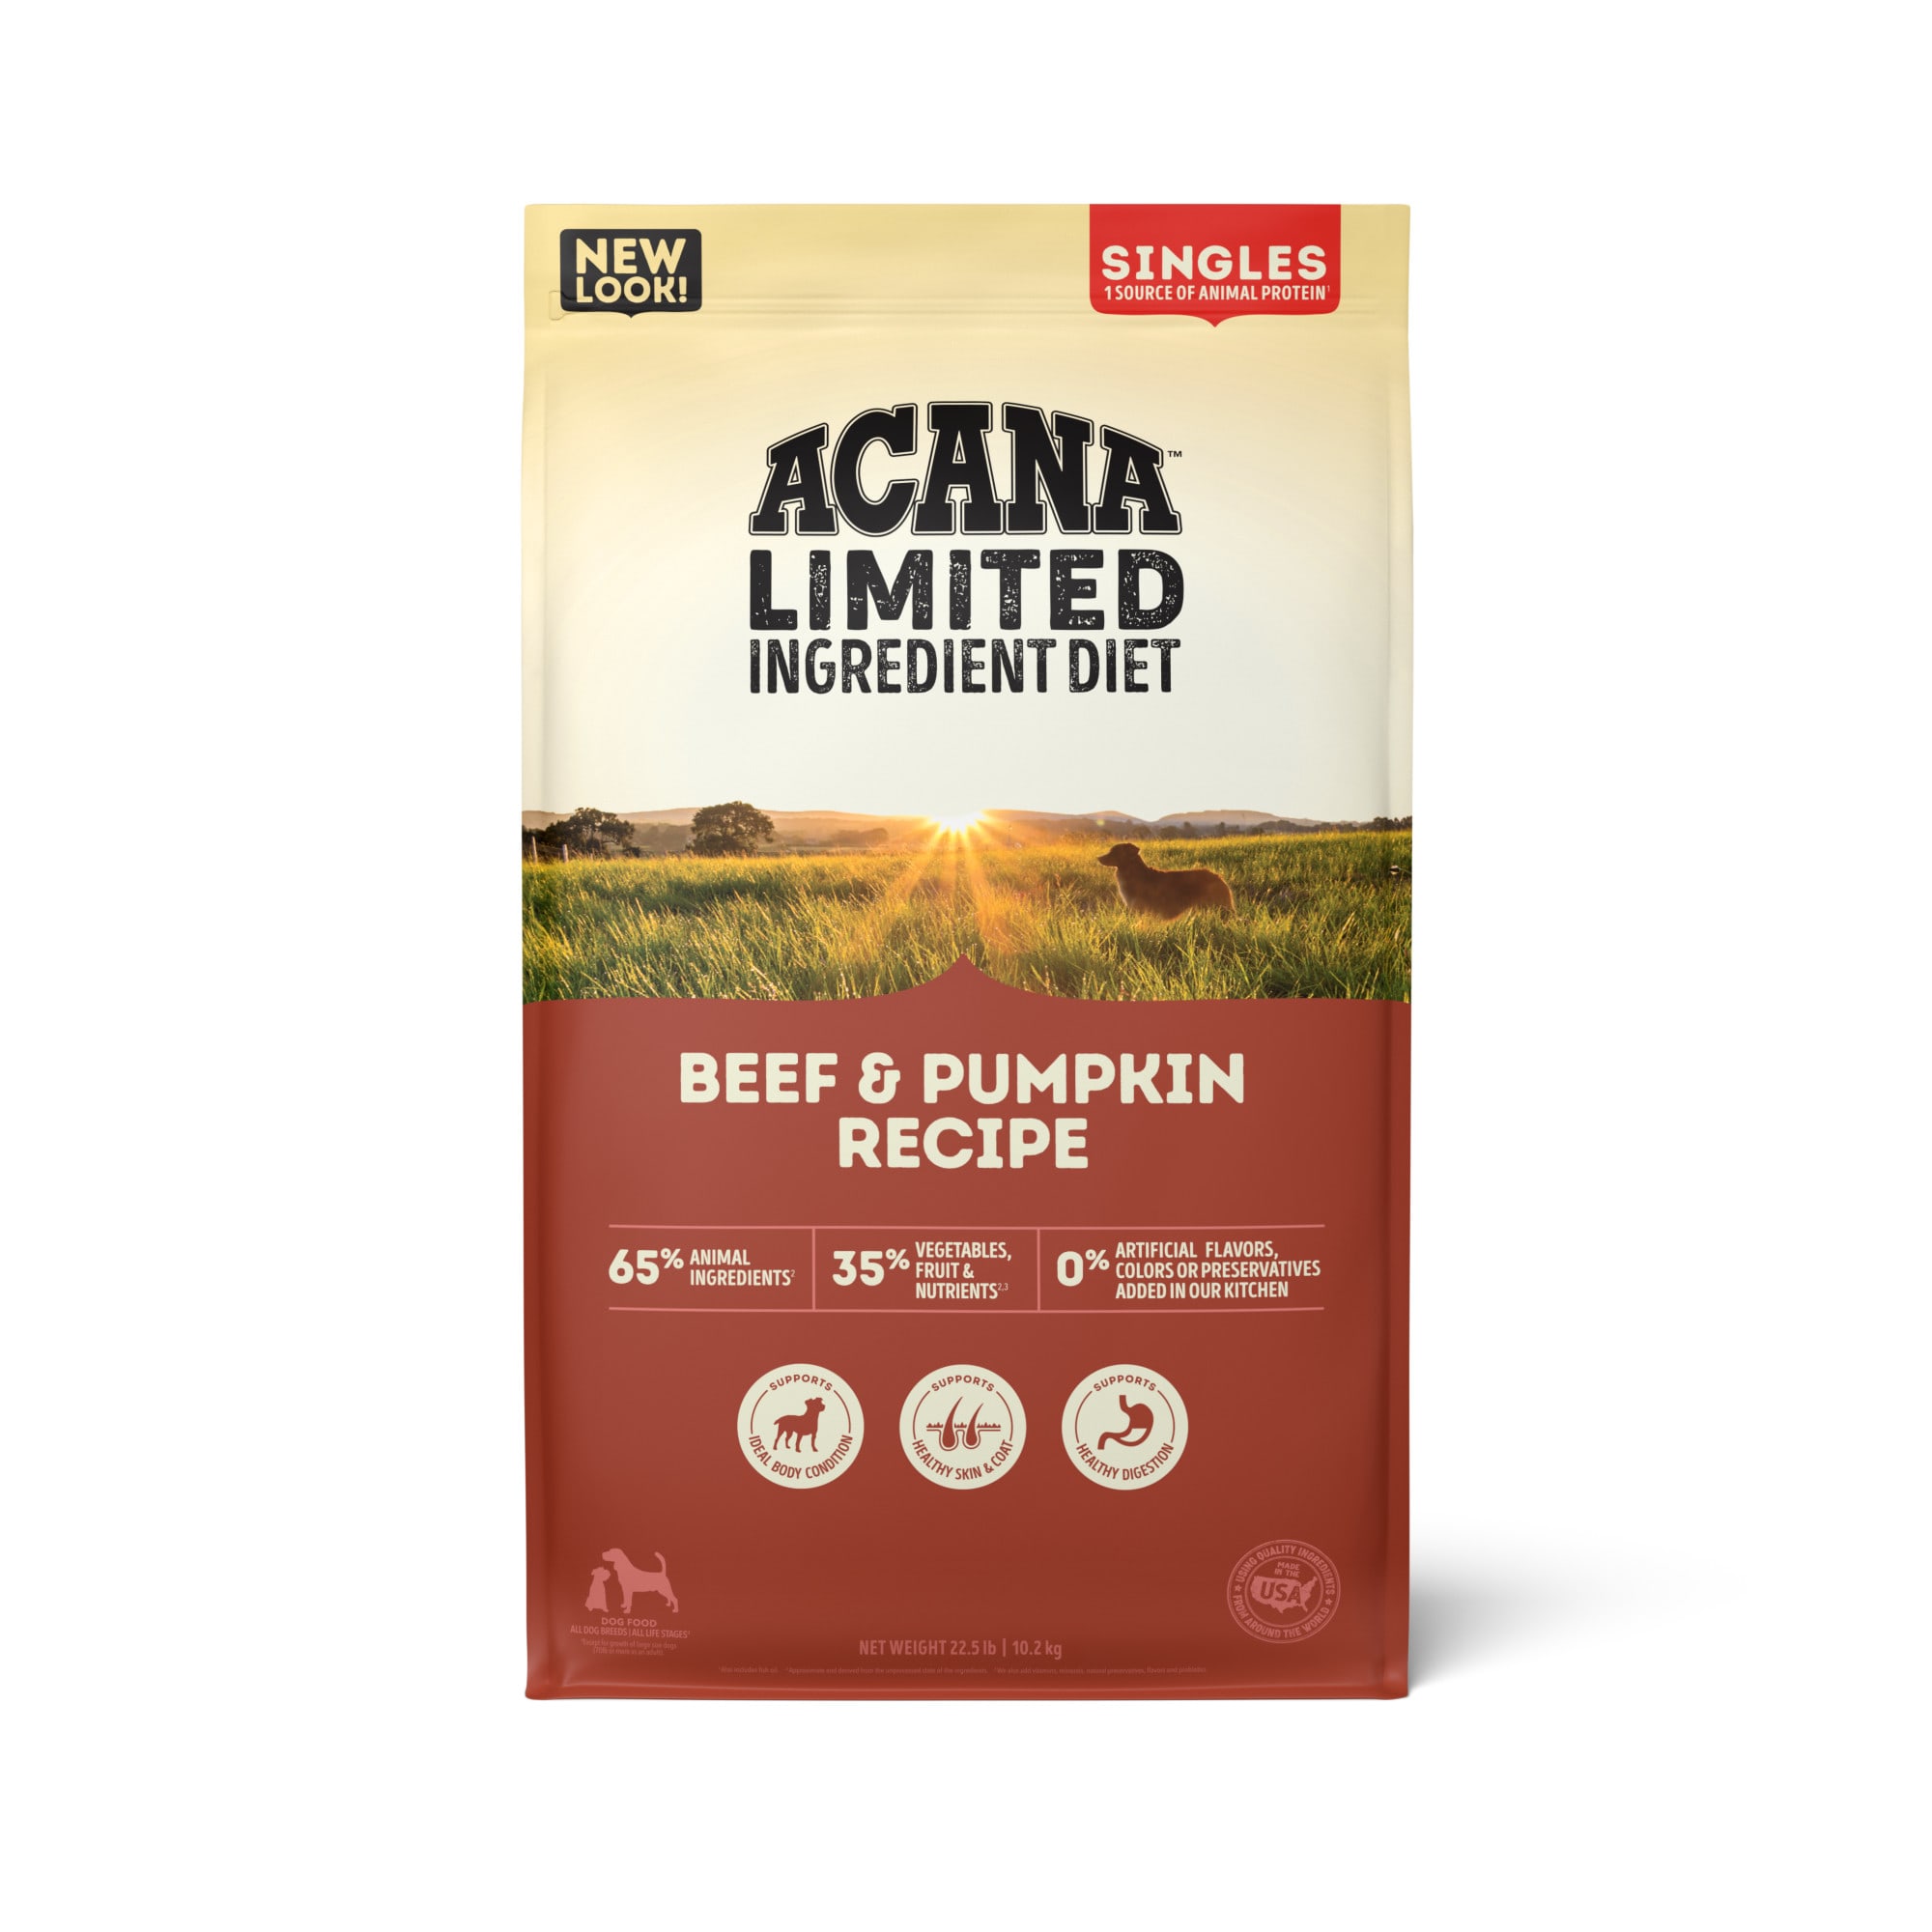 ACANA Singles Limited Ingredient Grain-Free High Protein Beef & Pumpkin Dry Dog Food, 25 lbs. | Petco